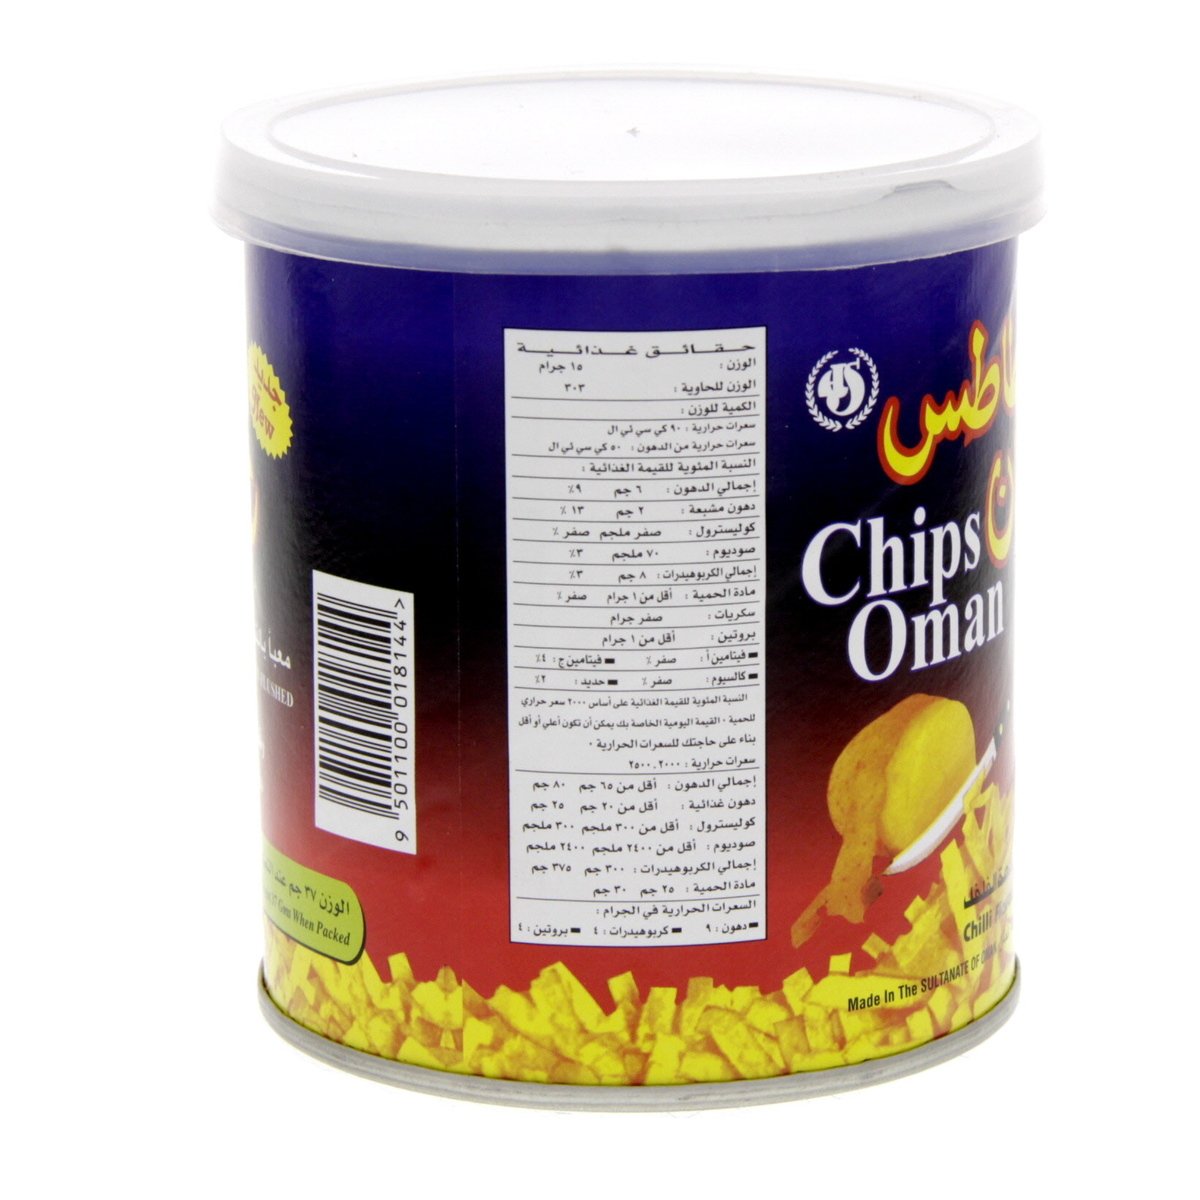 Oman Potato Chips Chilli Flavour 37g